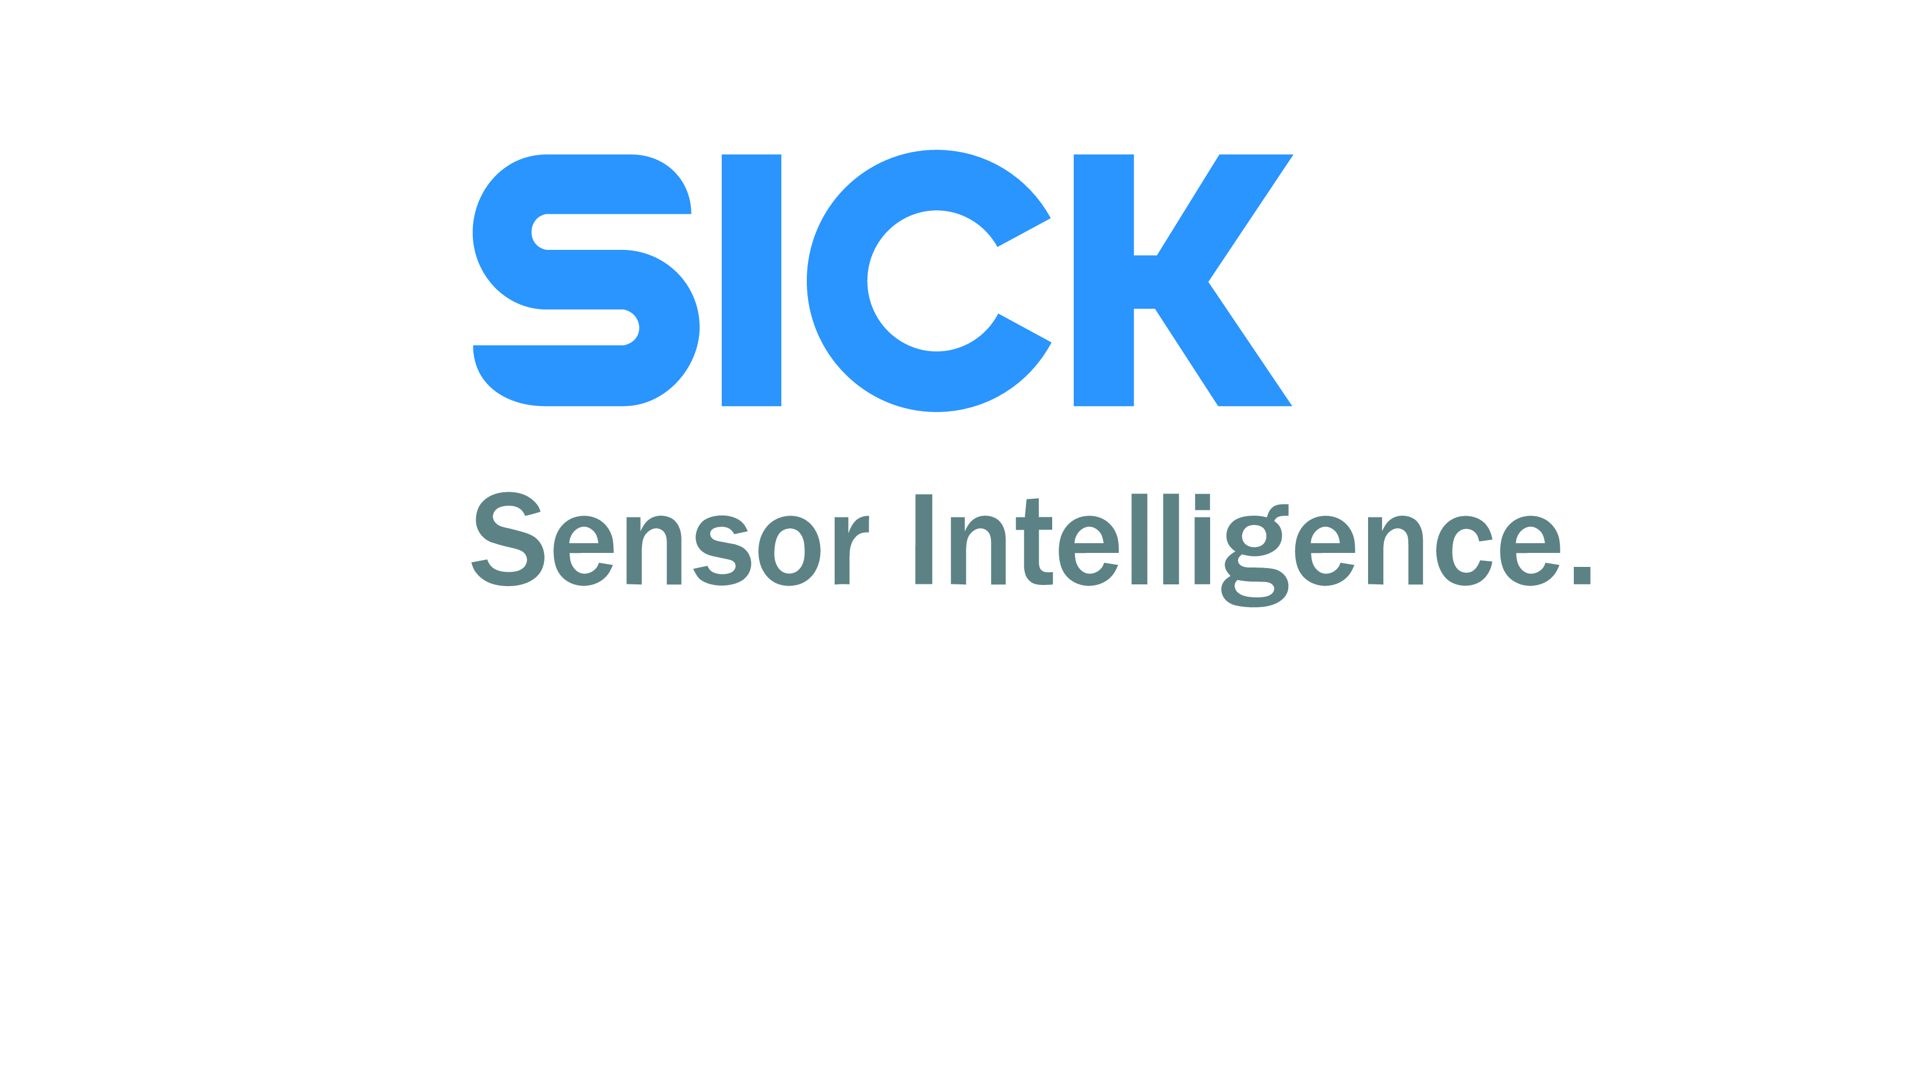 SICK logo